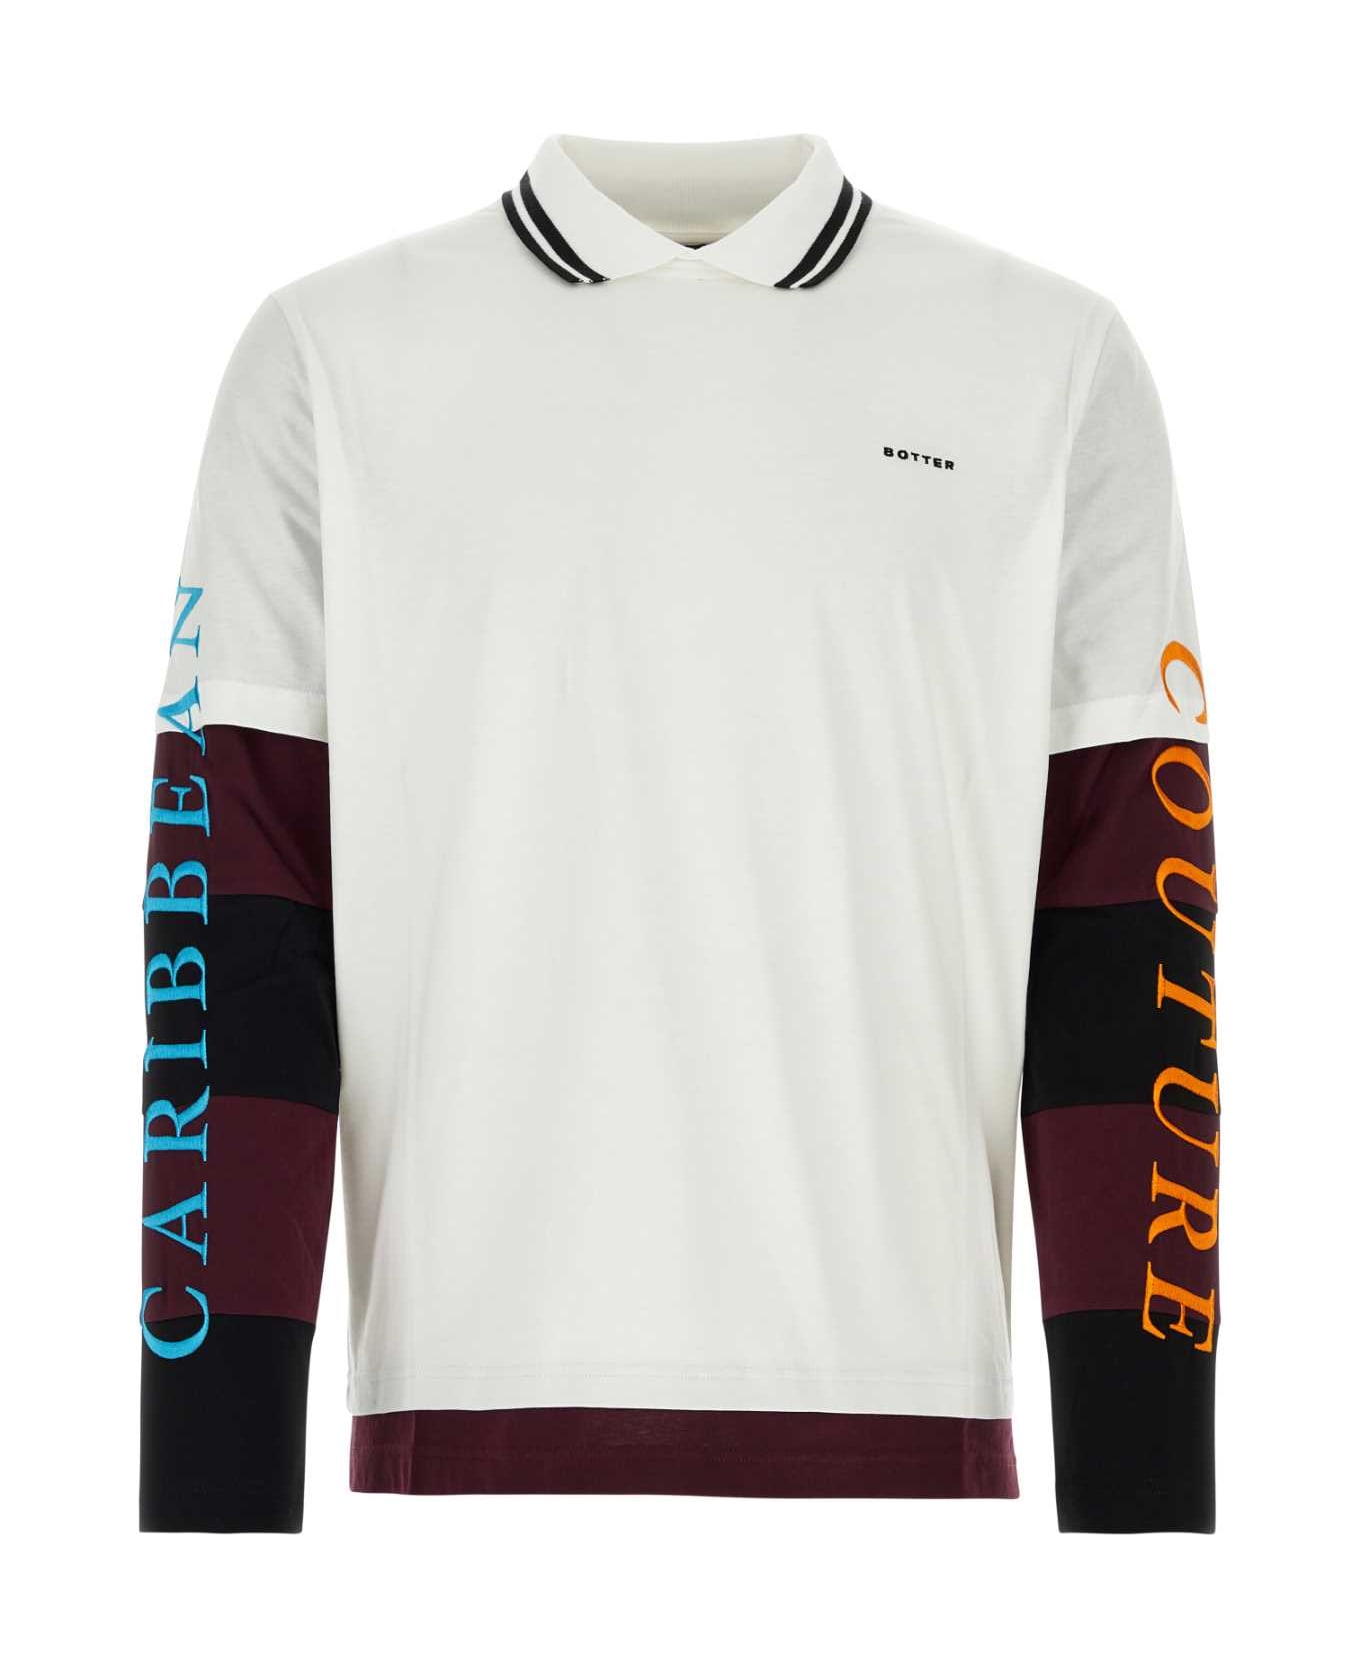 Botter Multicolor Cotton Polo Shirt - OFFWHITE BORDEAUSTR CARIB COUT フリース